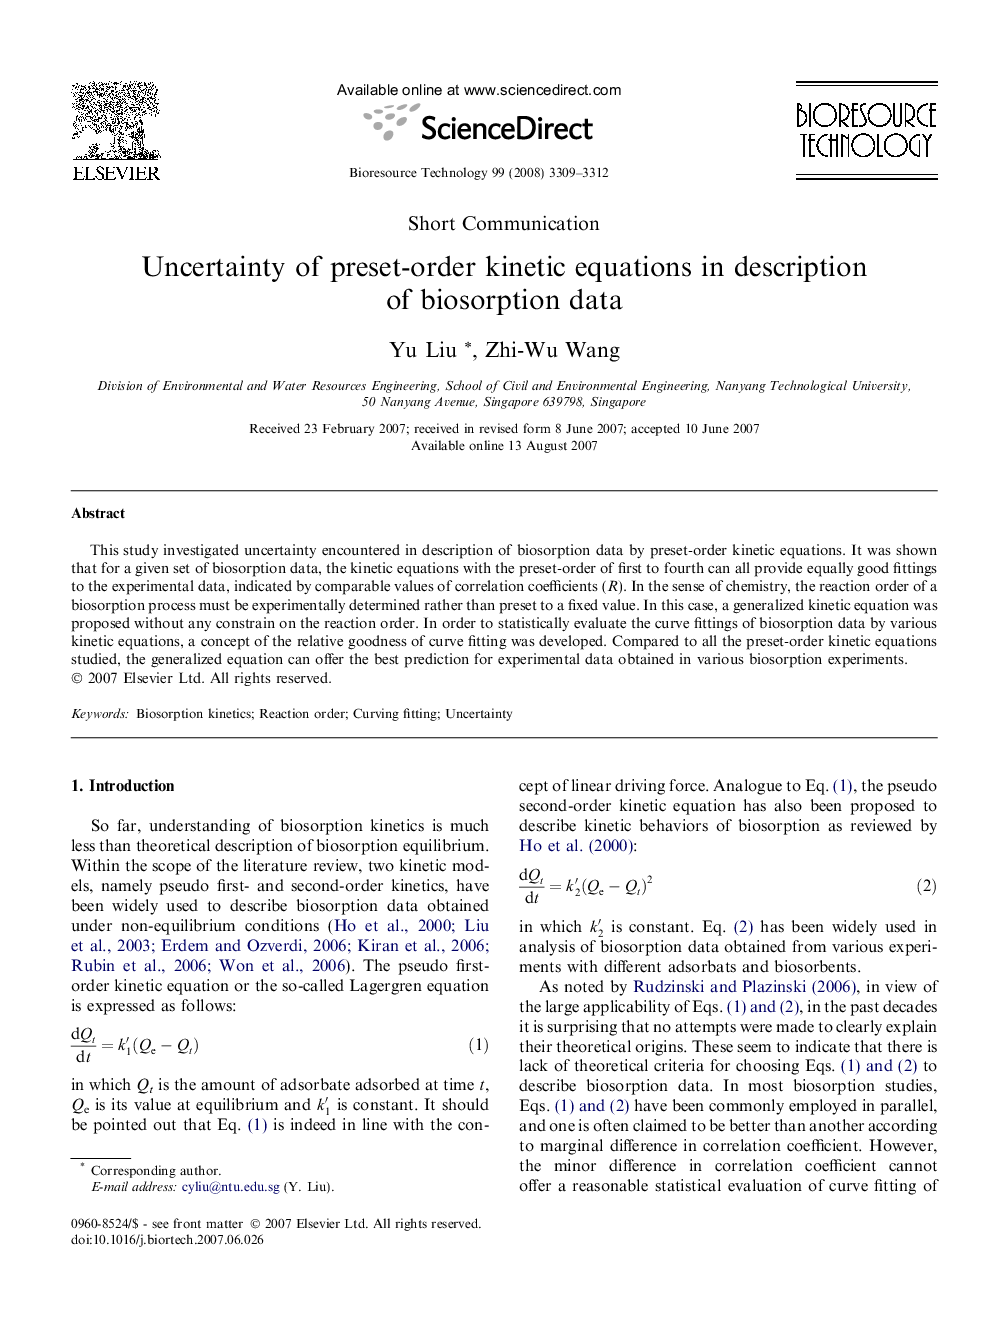 Uncertainty of preset-order kinetic equations in description of biosorption data